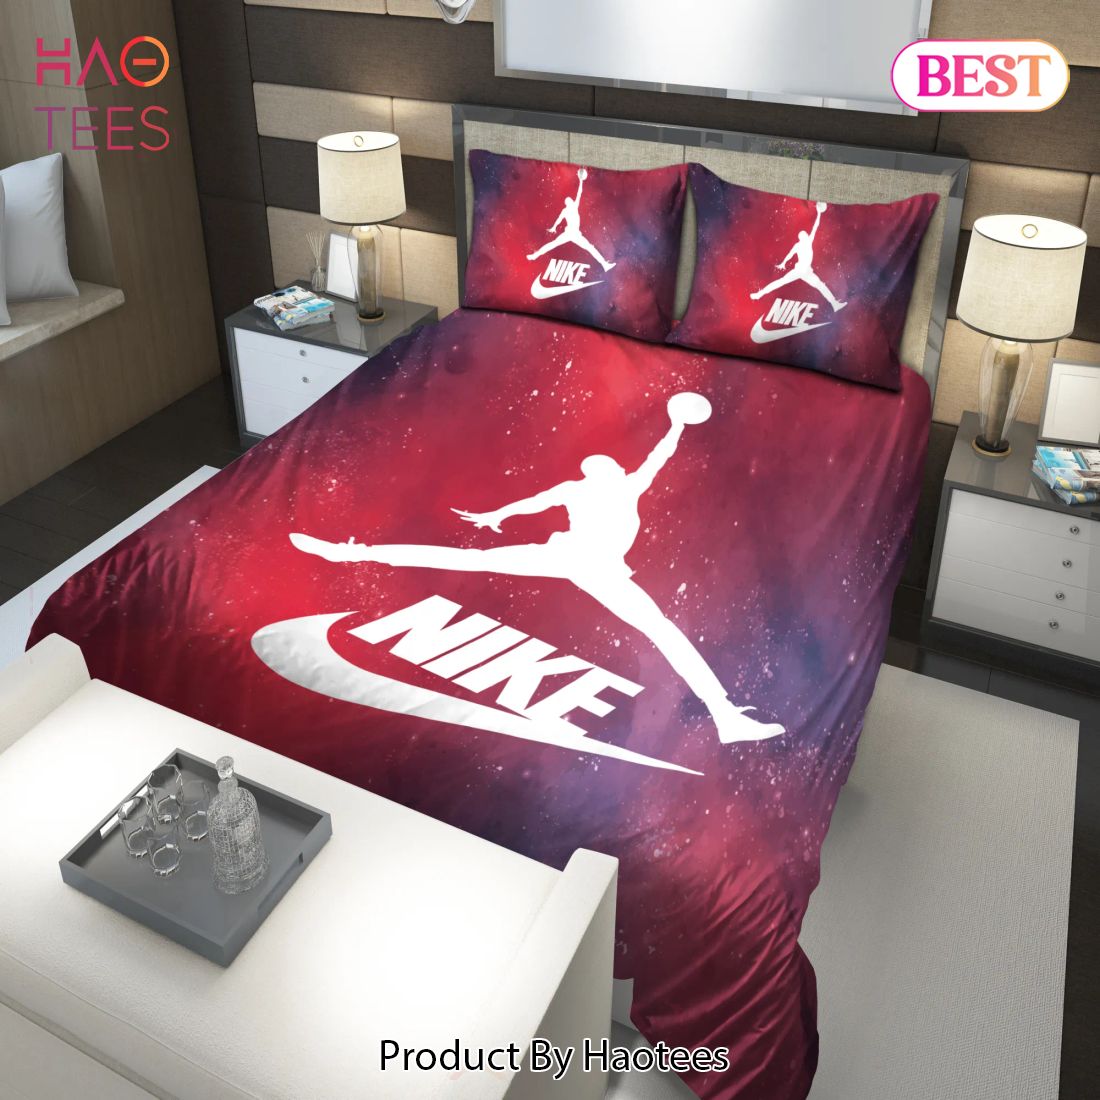 Vroegst smal Uitsluiting SALE] Nike Jordan Red Fashion Luxury Brand Premium Bedding Set Home Decor